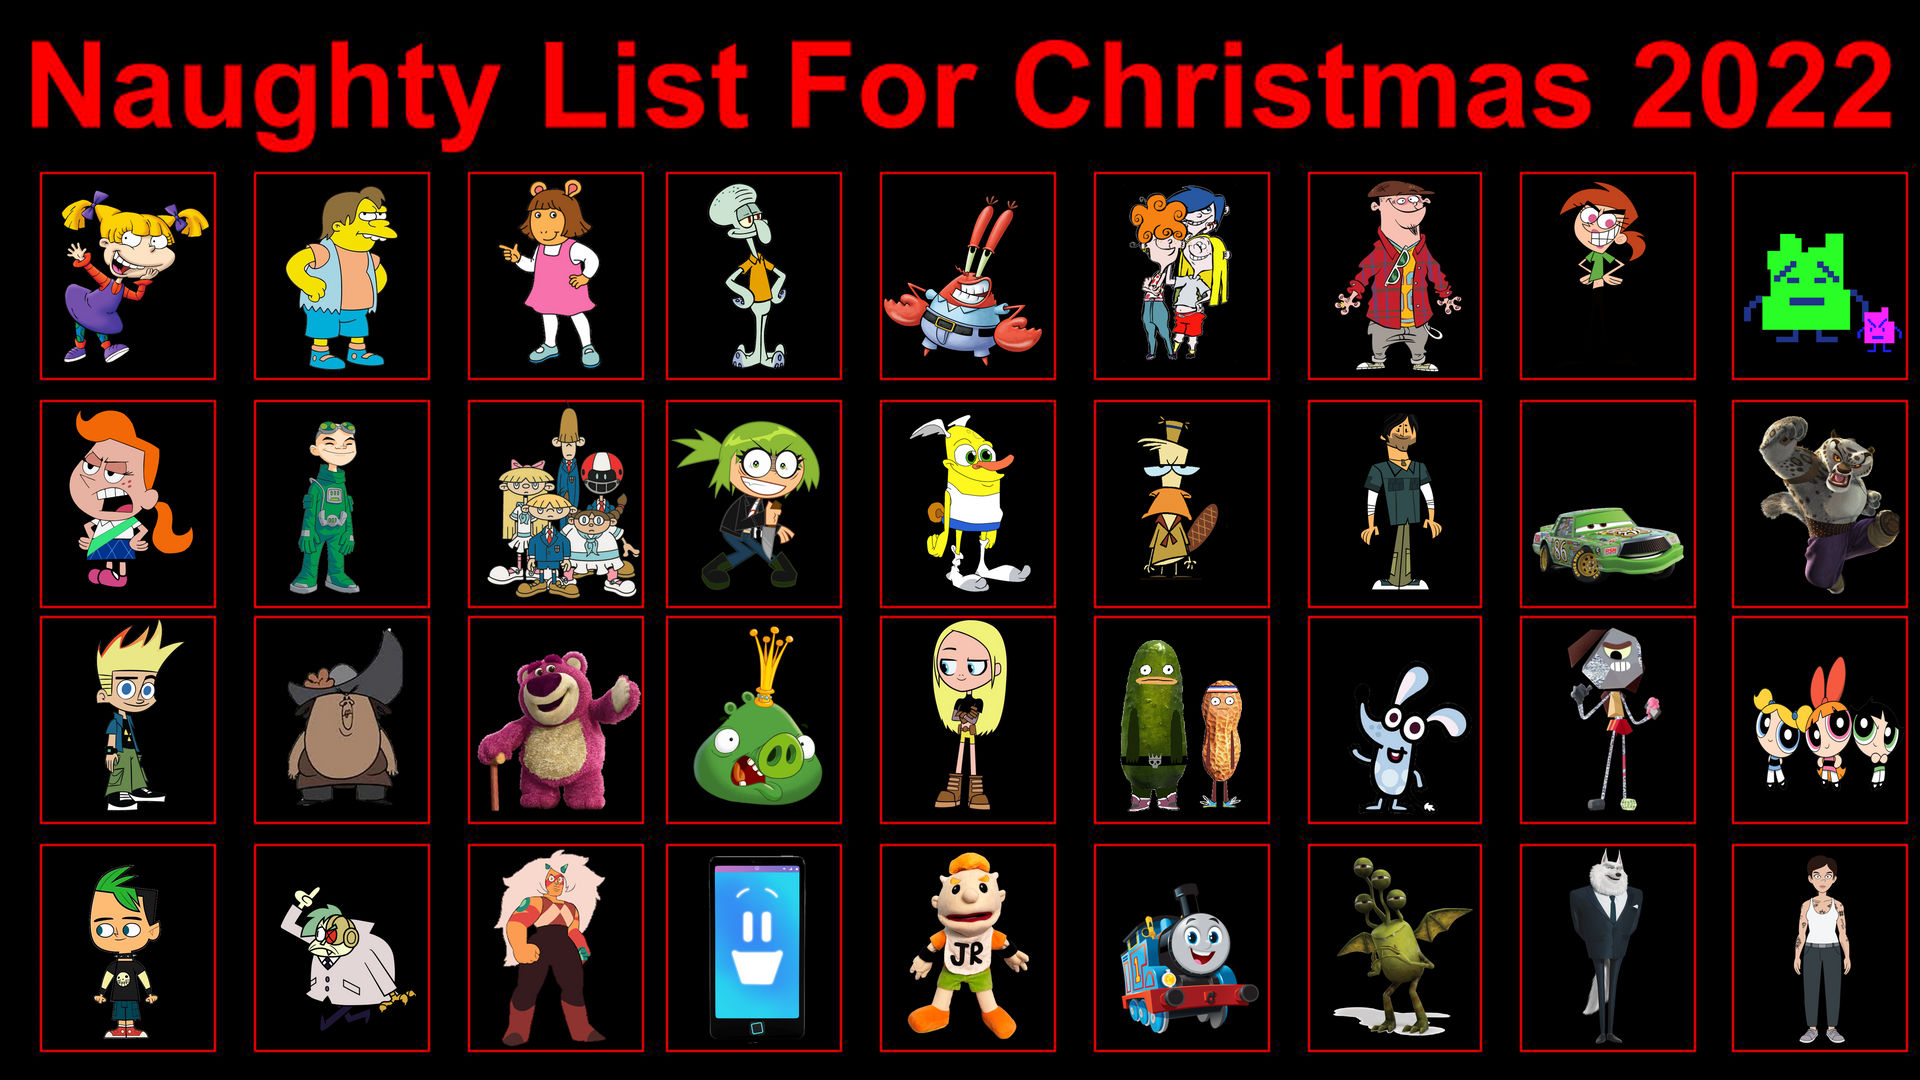 My Naughty List for Christmas 2023 by PeytonAuz1999 on DeviantArt